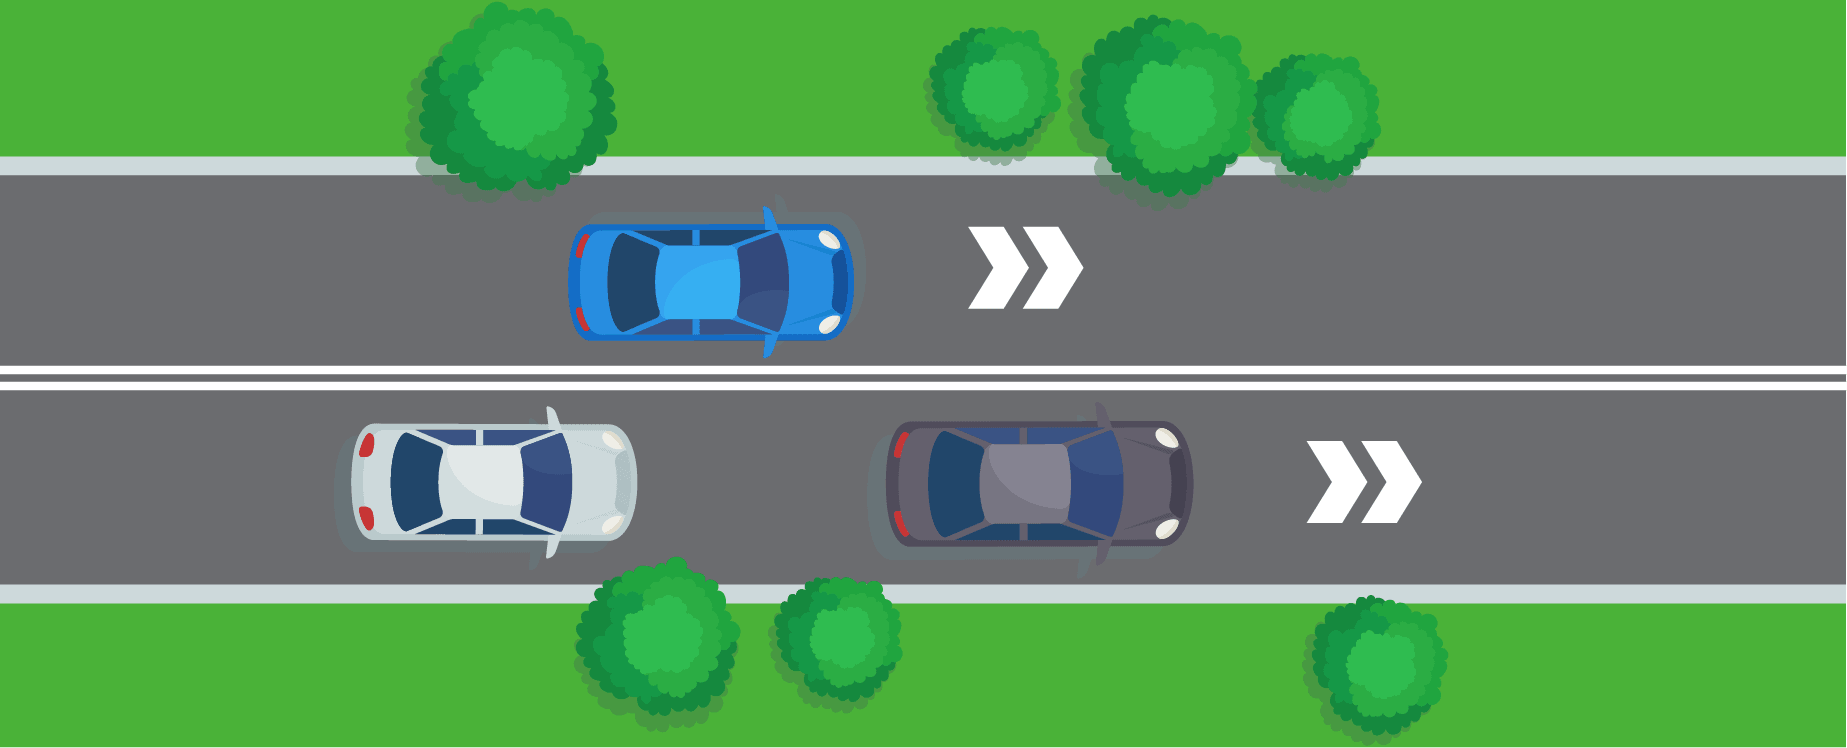 Road Marking for Same Direction